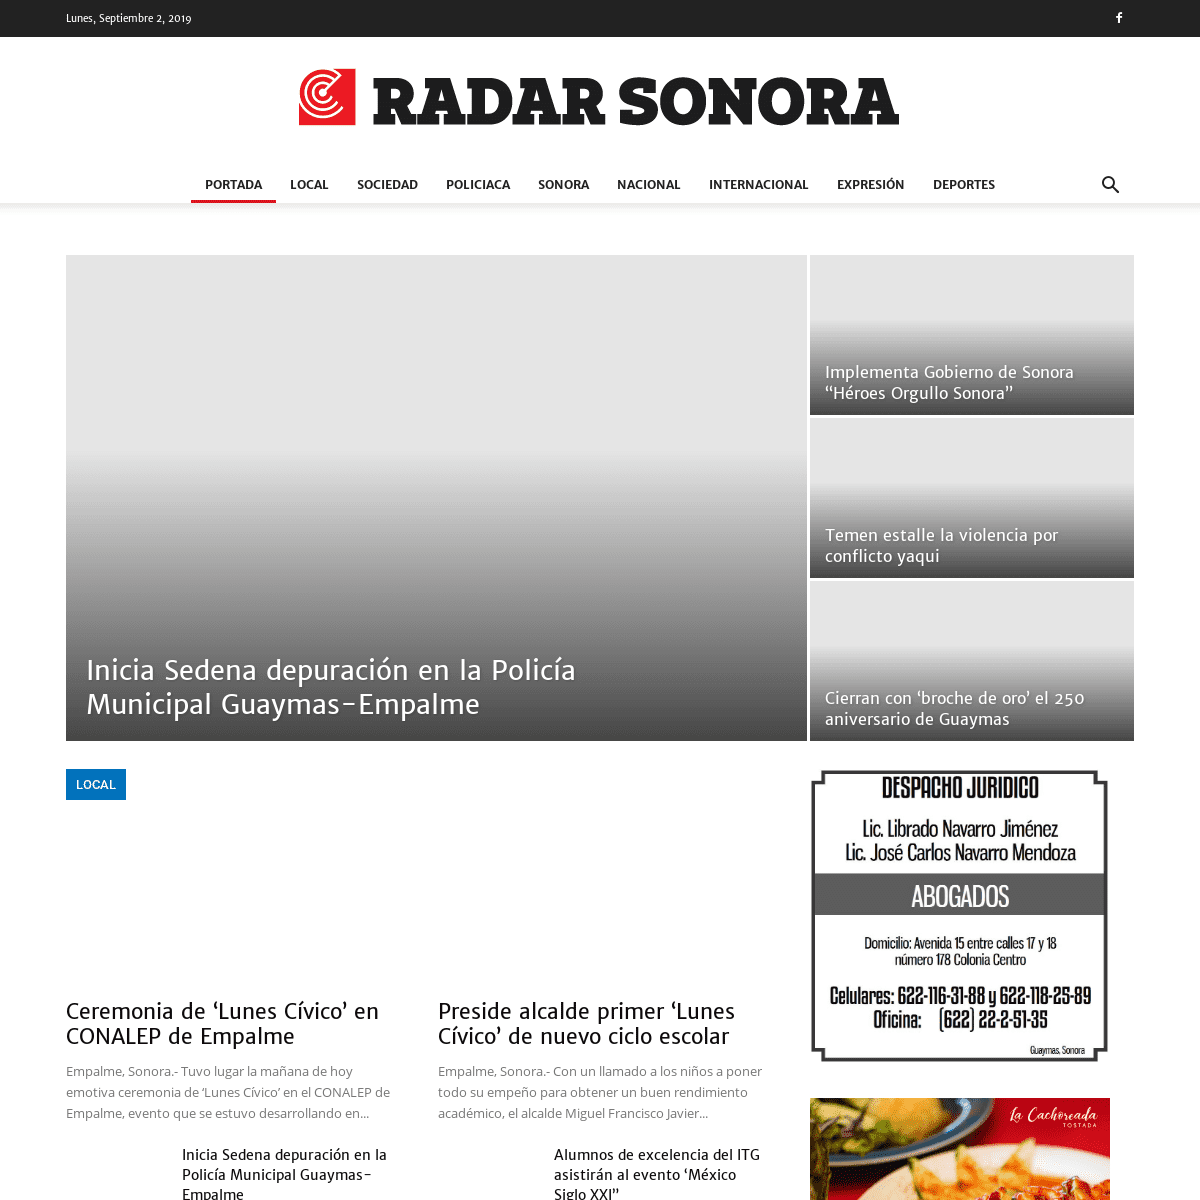 PORTADA - Radar Sonora